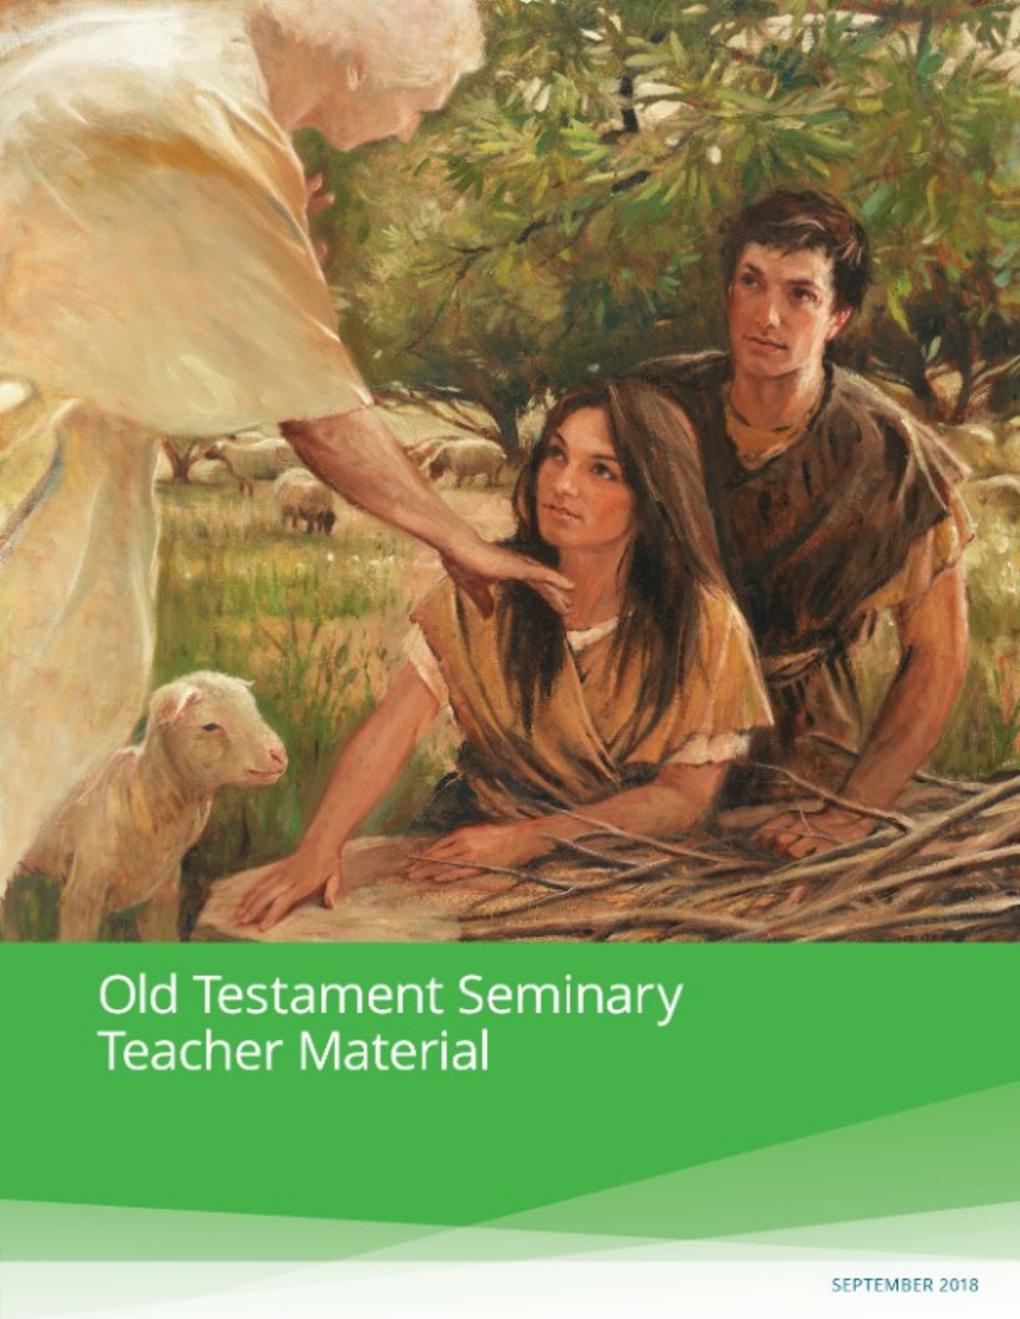 Old Testament Seminary Teacher Manual